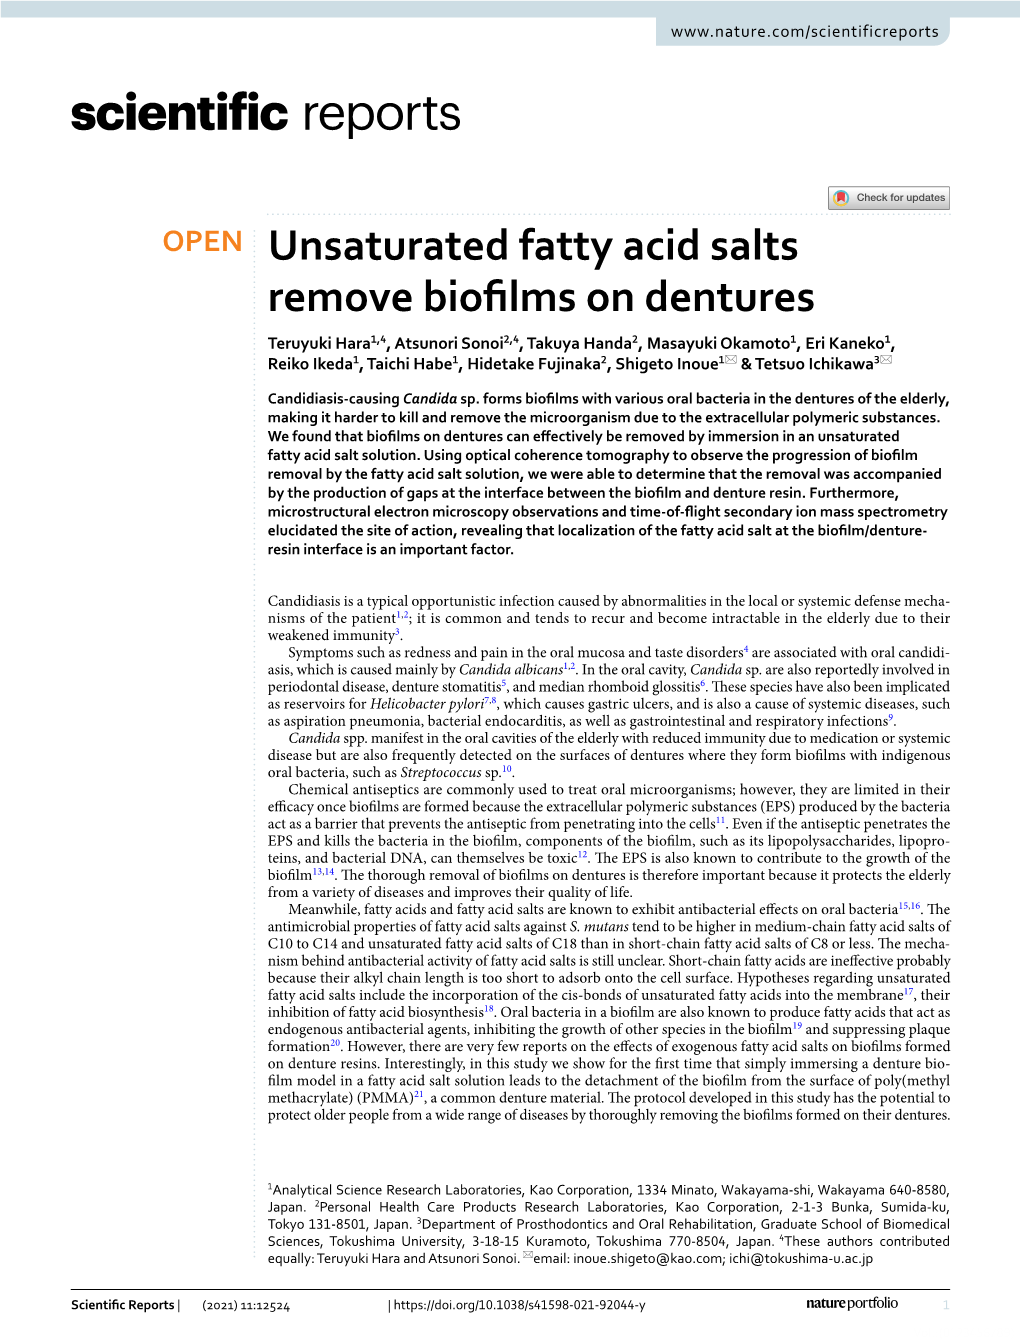 Unsaturated Fatty Acid Salts Remove Biofilms on Dentures